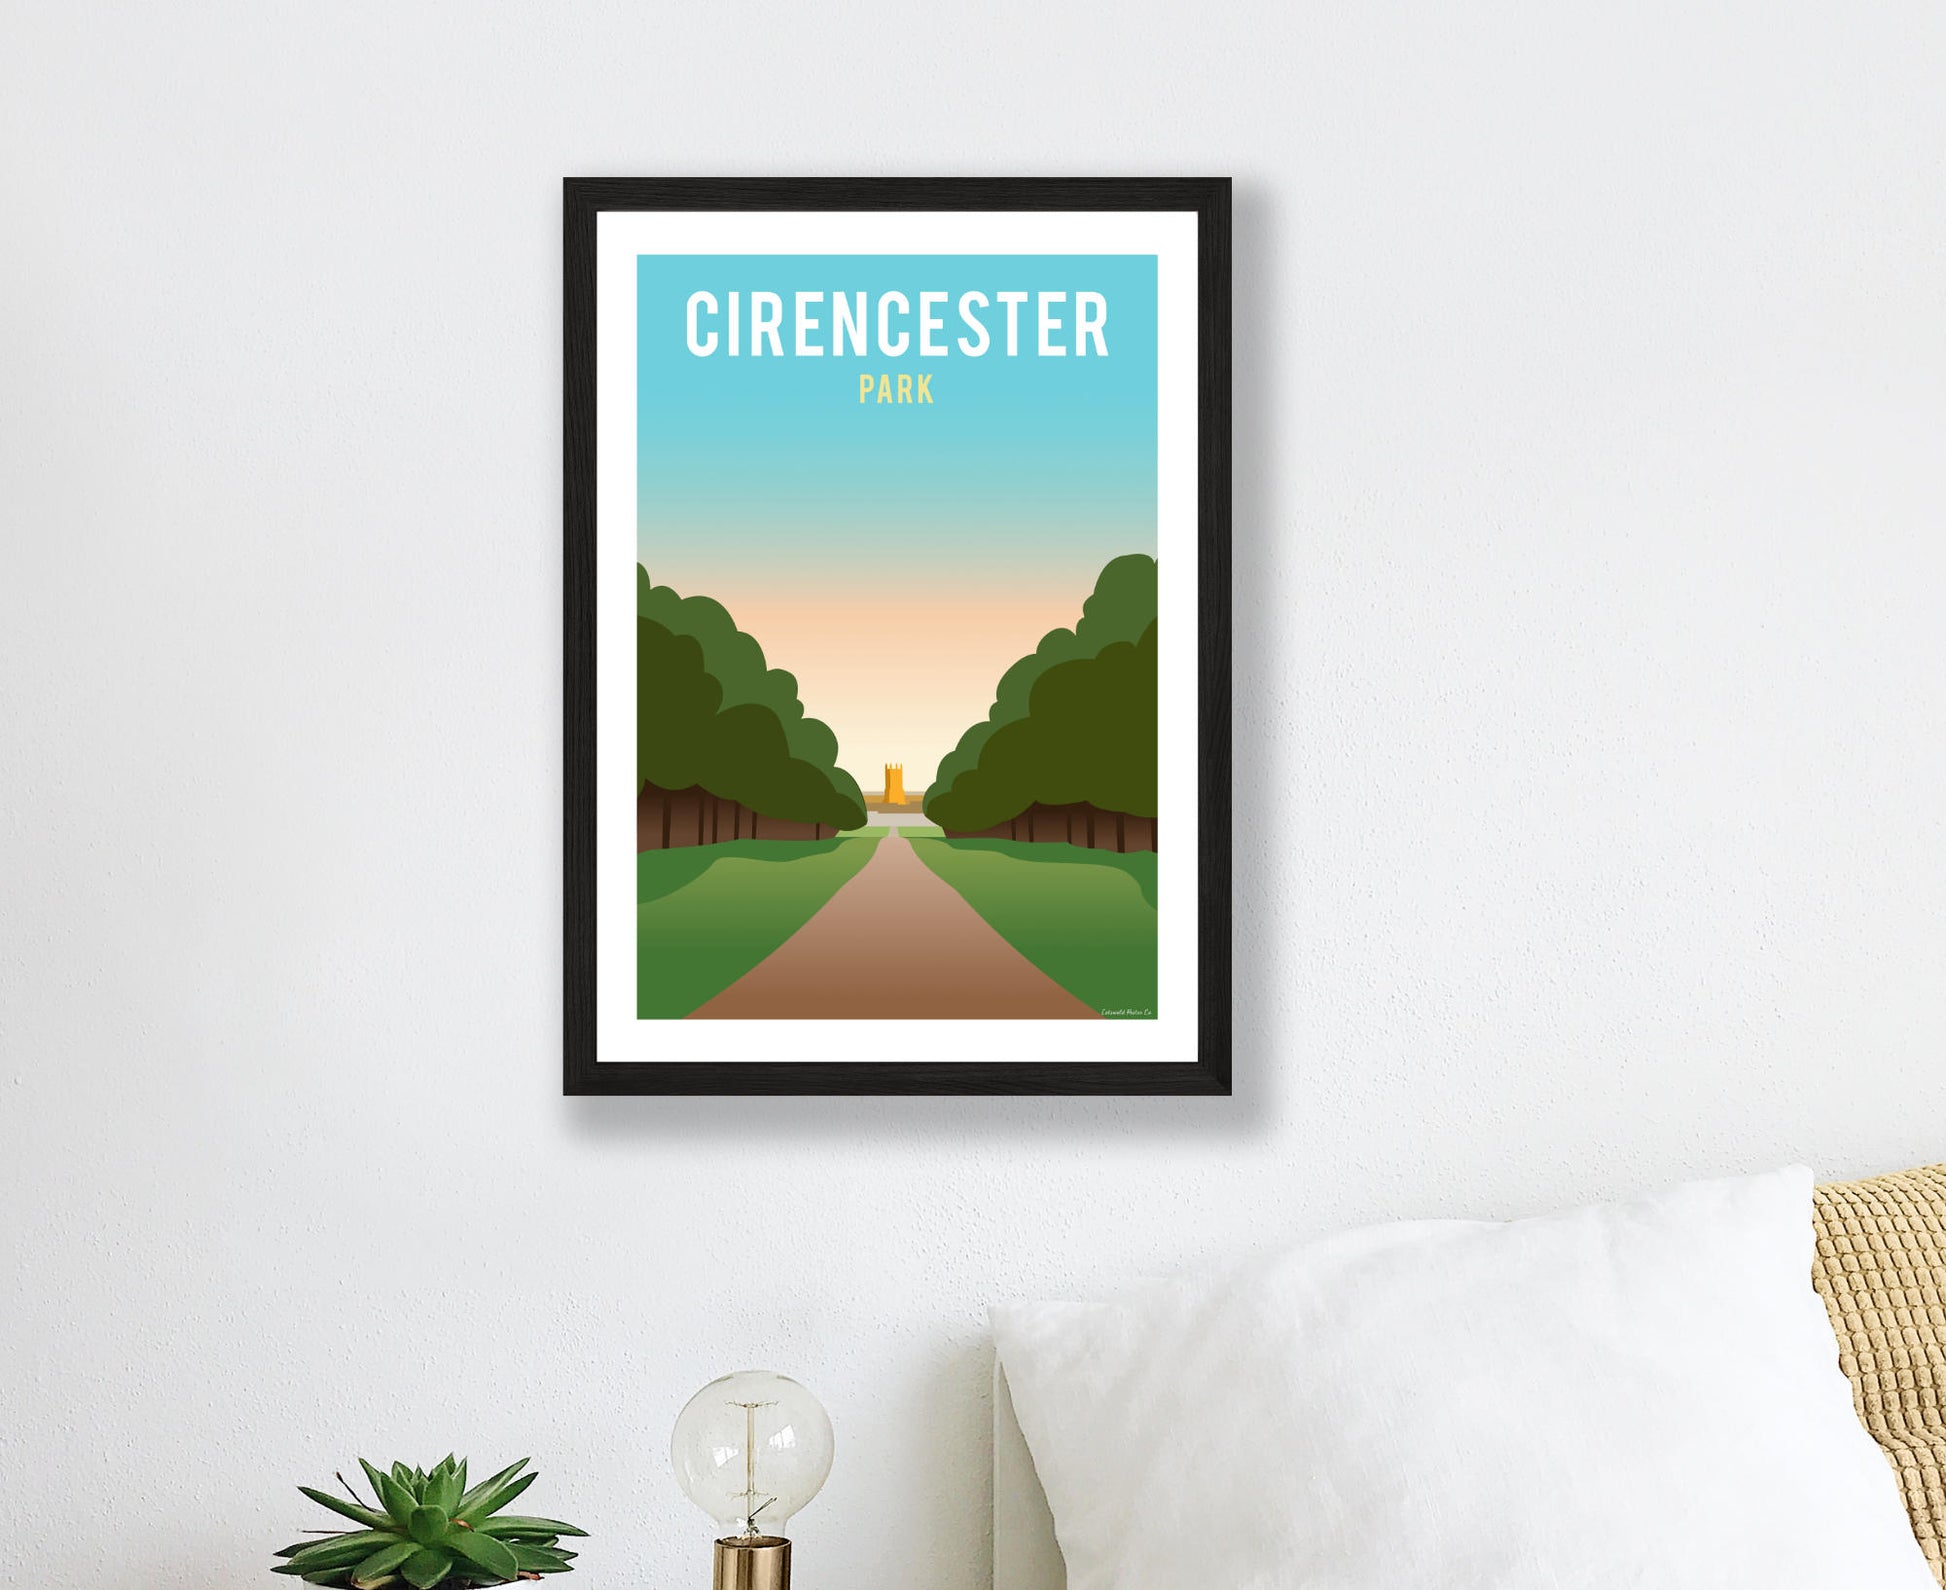 Cirencester Park Poster in black frame